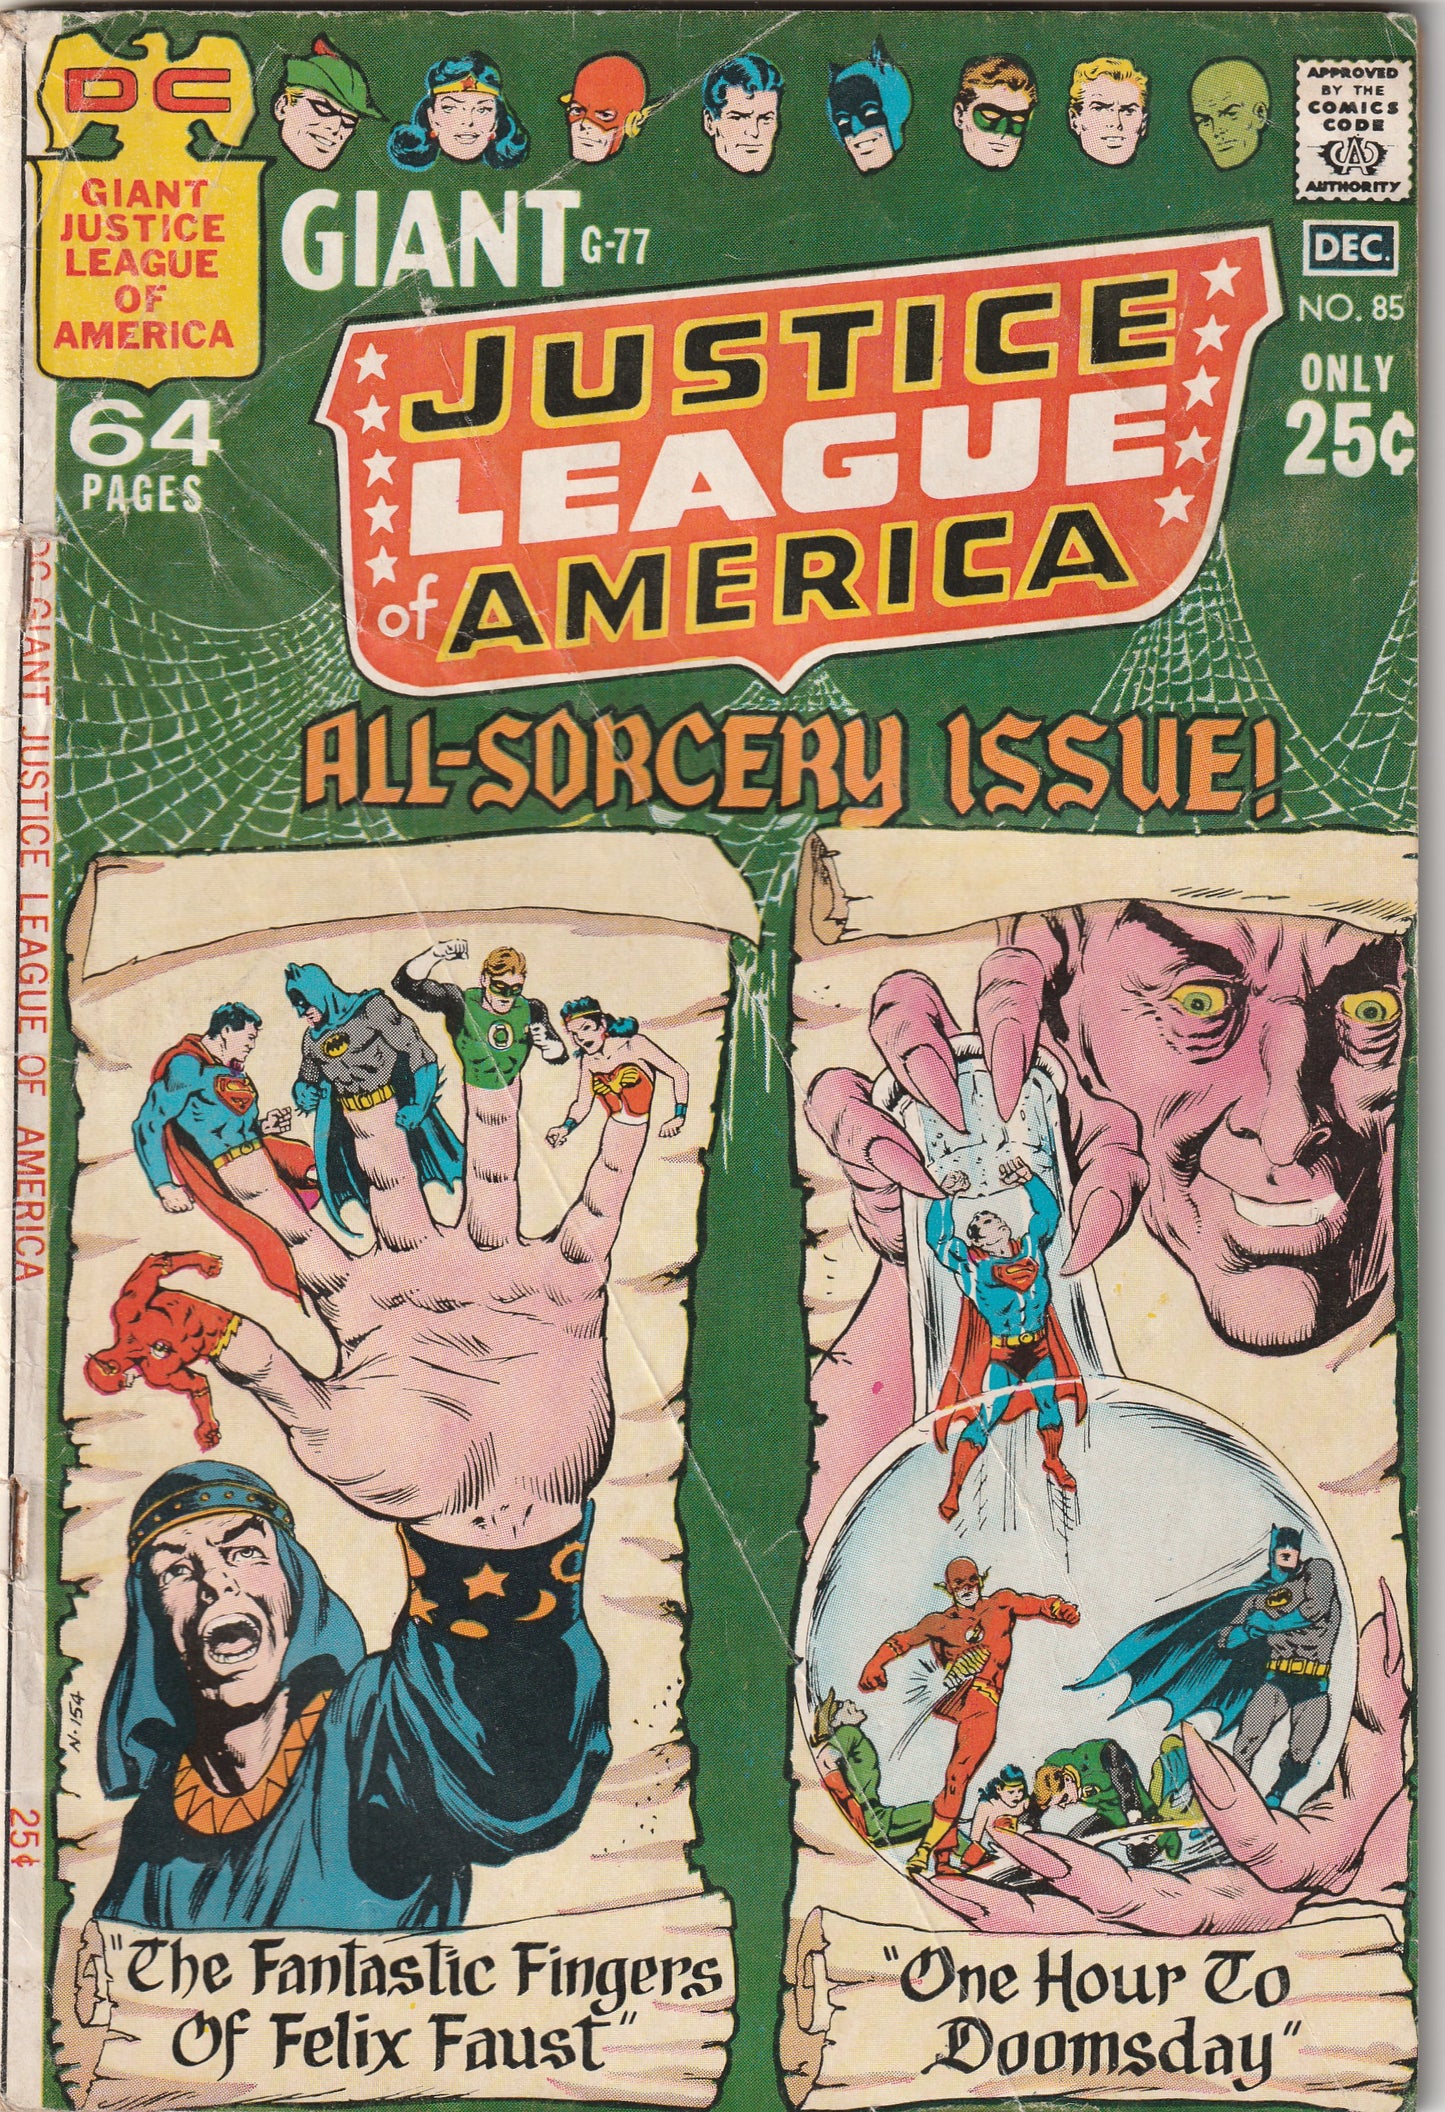 Justice League of America #85 (1970)